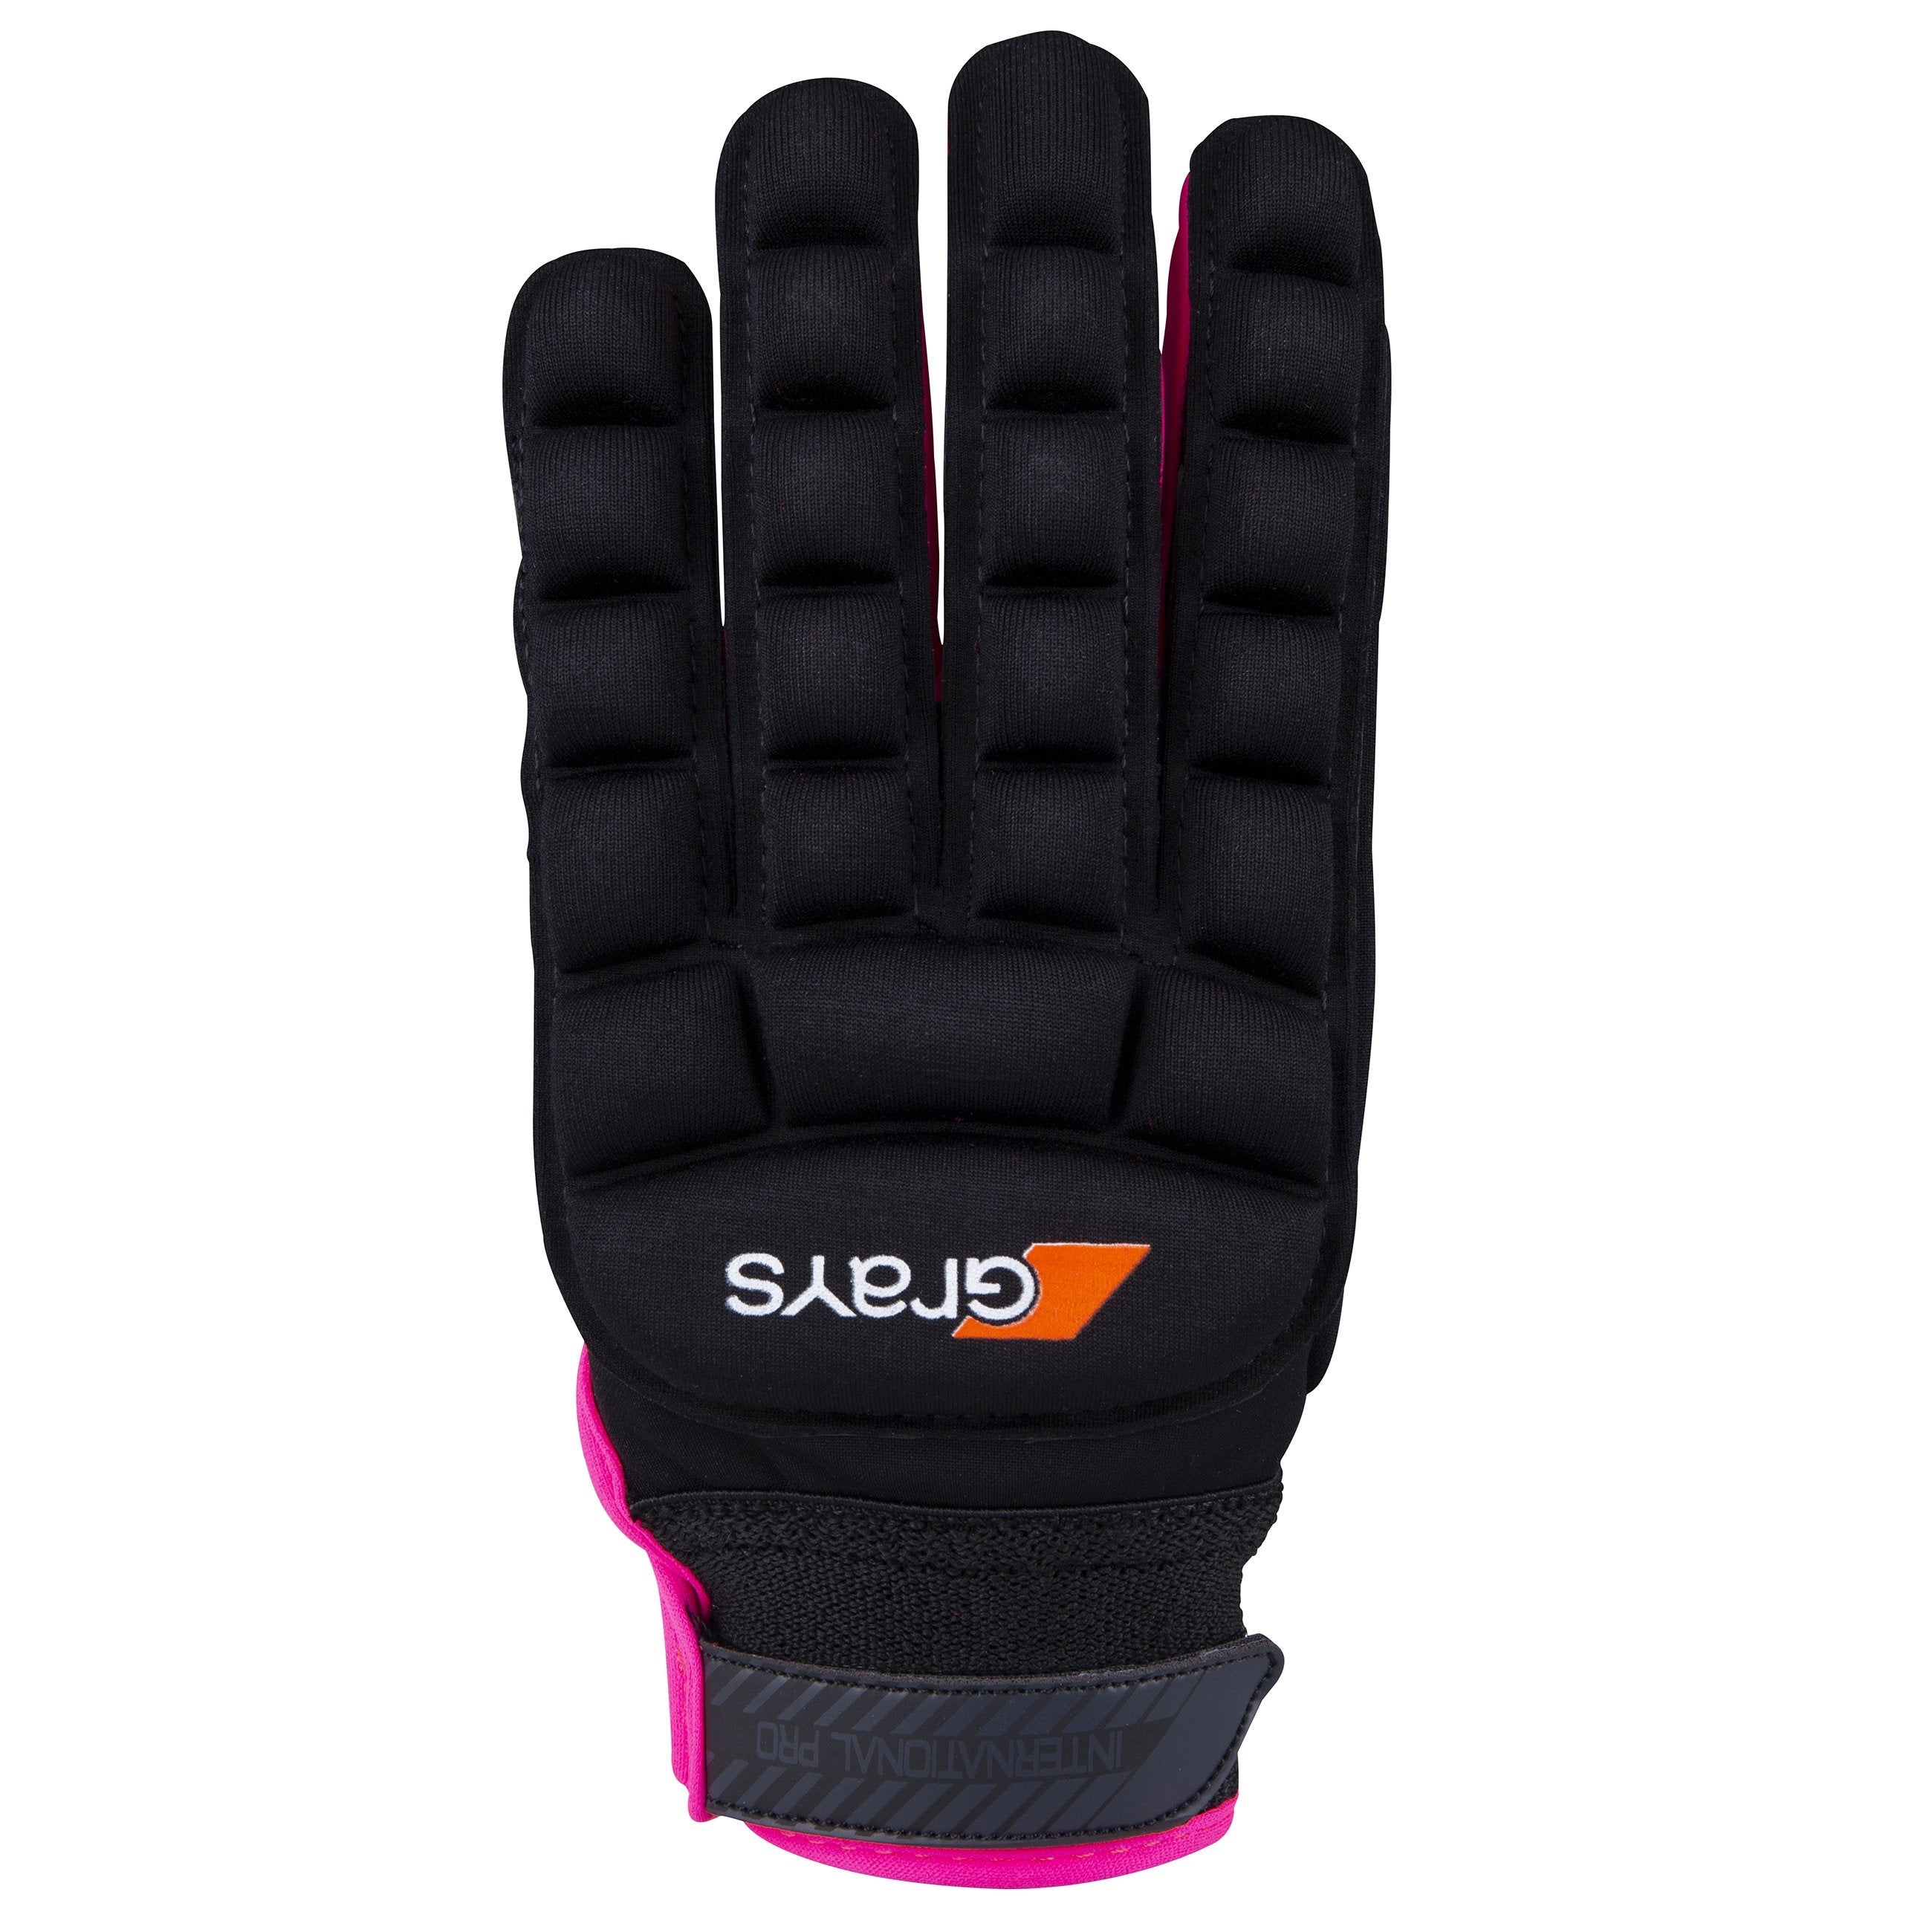 2600 HGEA16 6204705 Glove International Pro LH Black Neon Pink Back